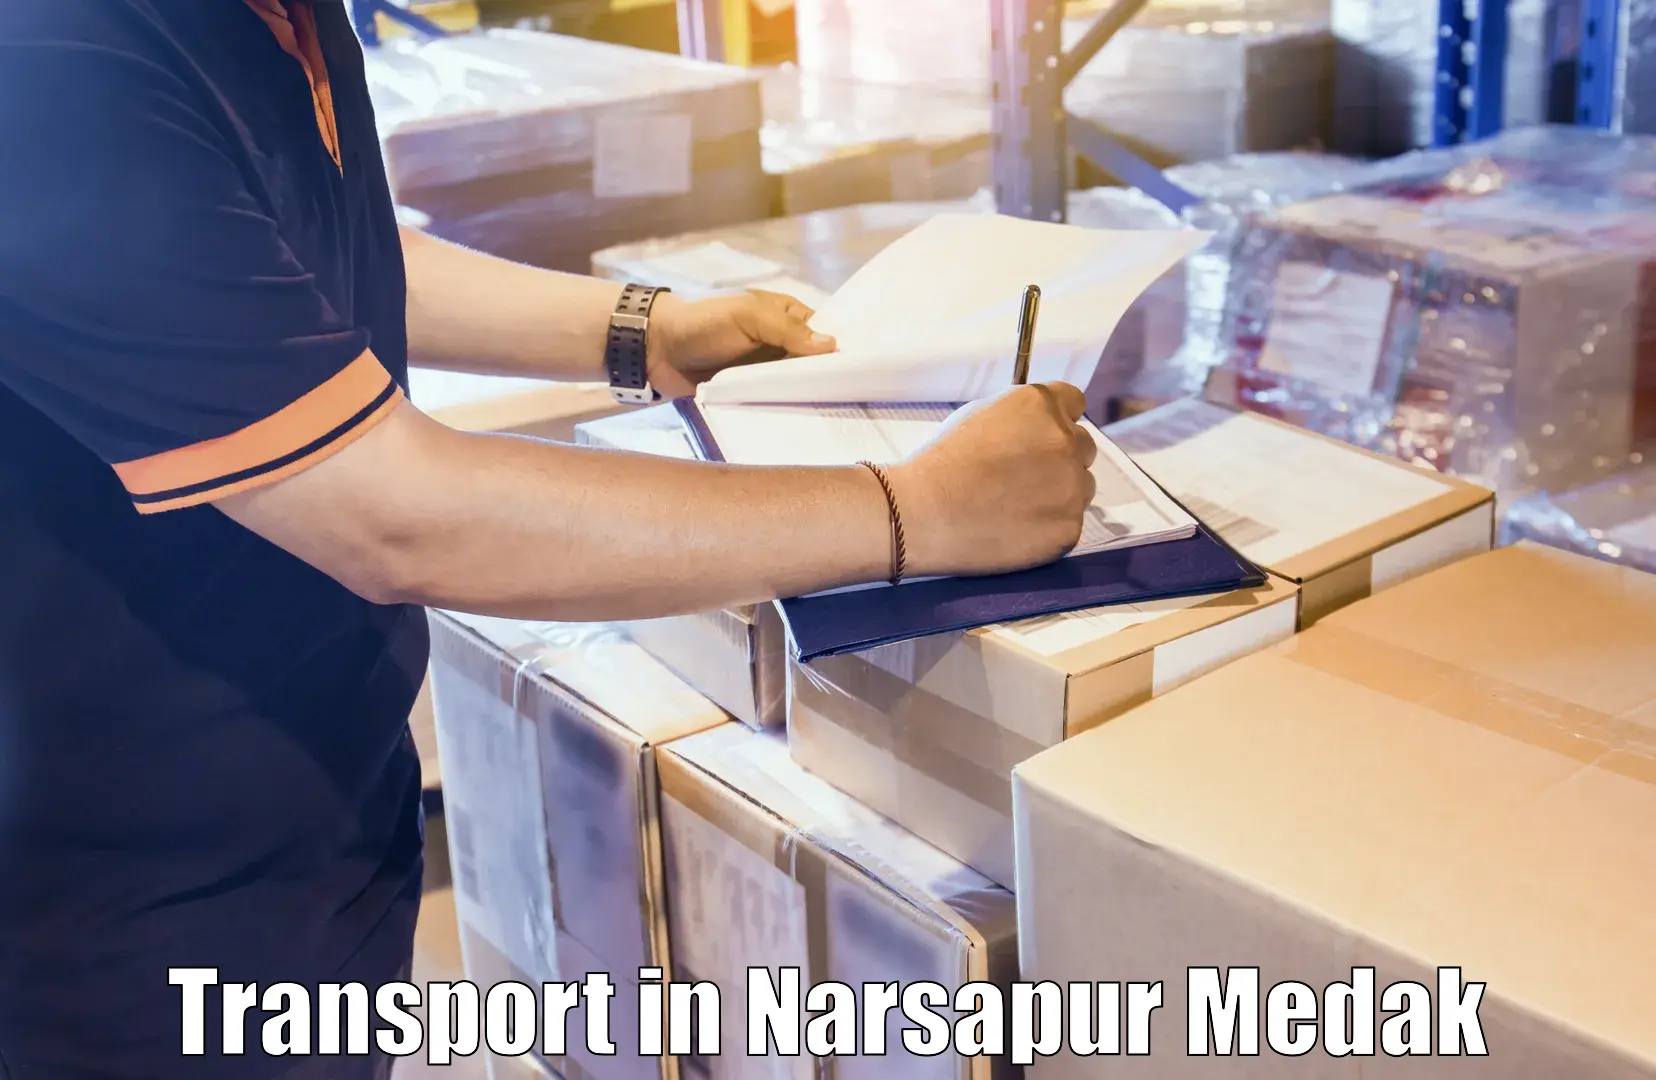 Road transport online services in Narsapur Medak